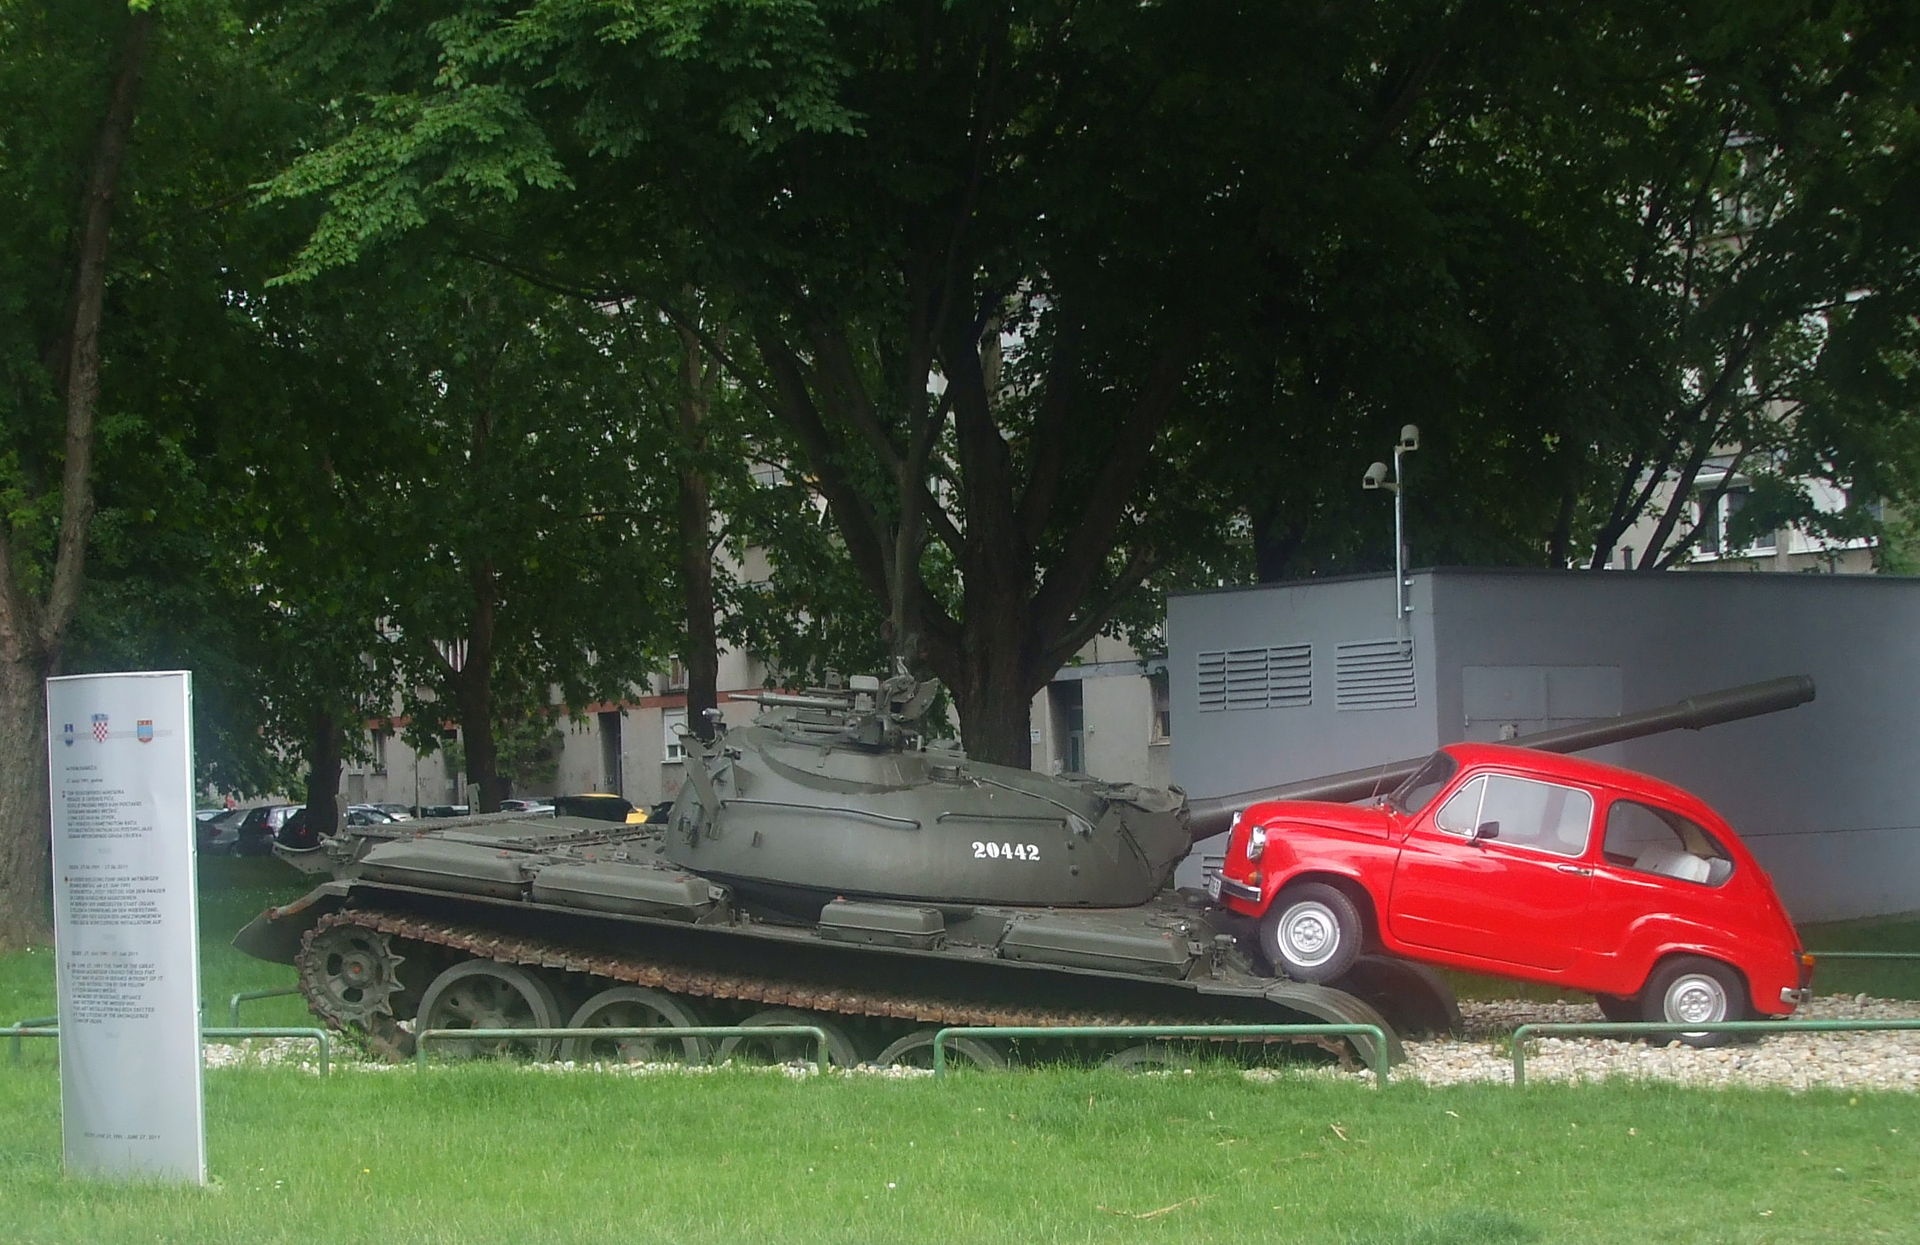 1991: The Yugoslav People’s Army tank crushed red Fiat in Osijek